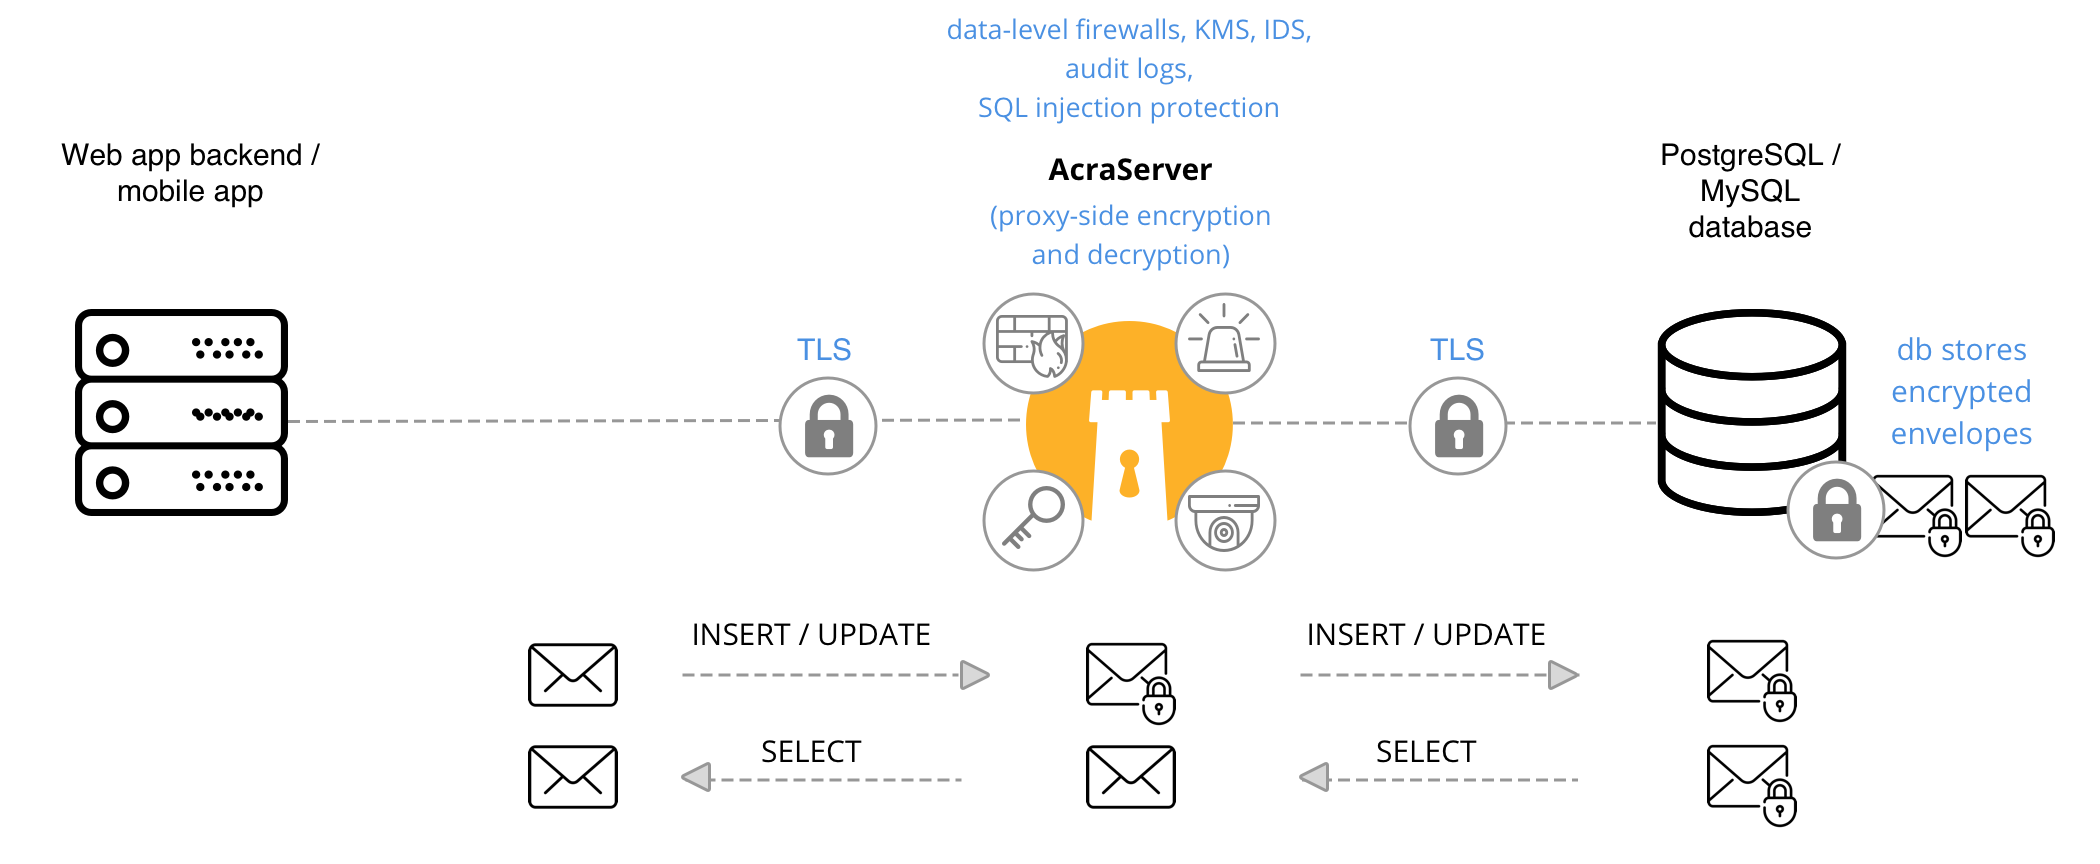 Server-side encryption and decryption using AcraServer